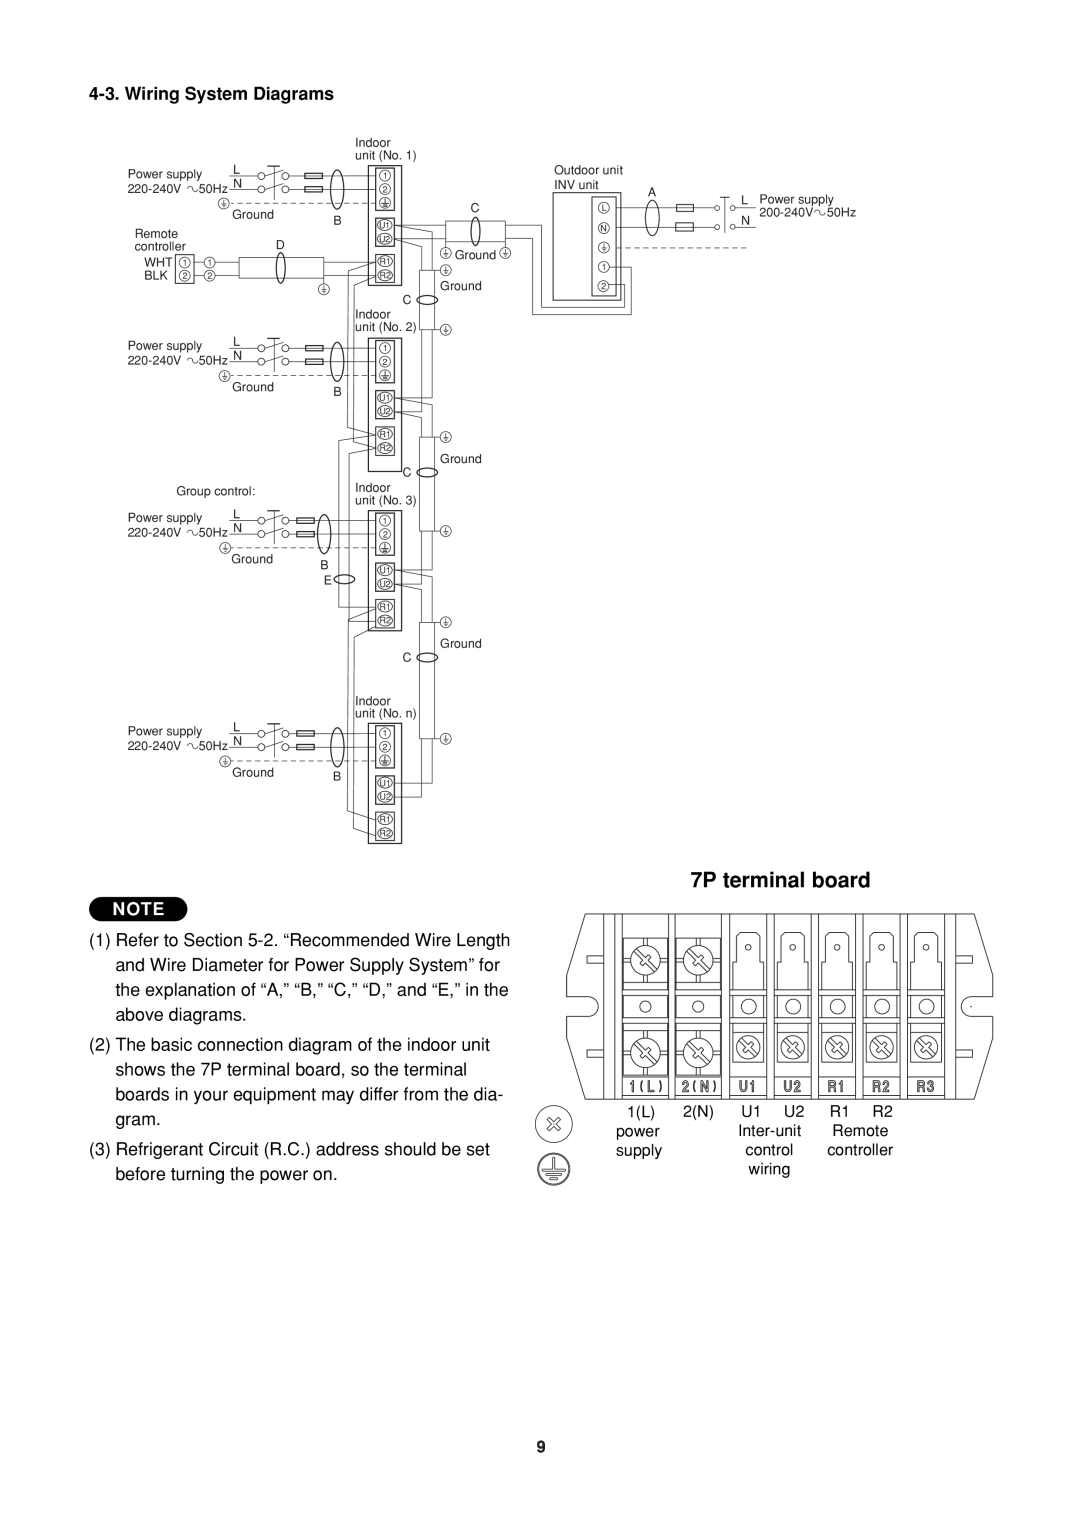 Sanyo SPW-FTR124EH56 operation manual 7P terminal board, Wiring System Diagrams 